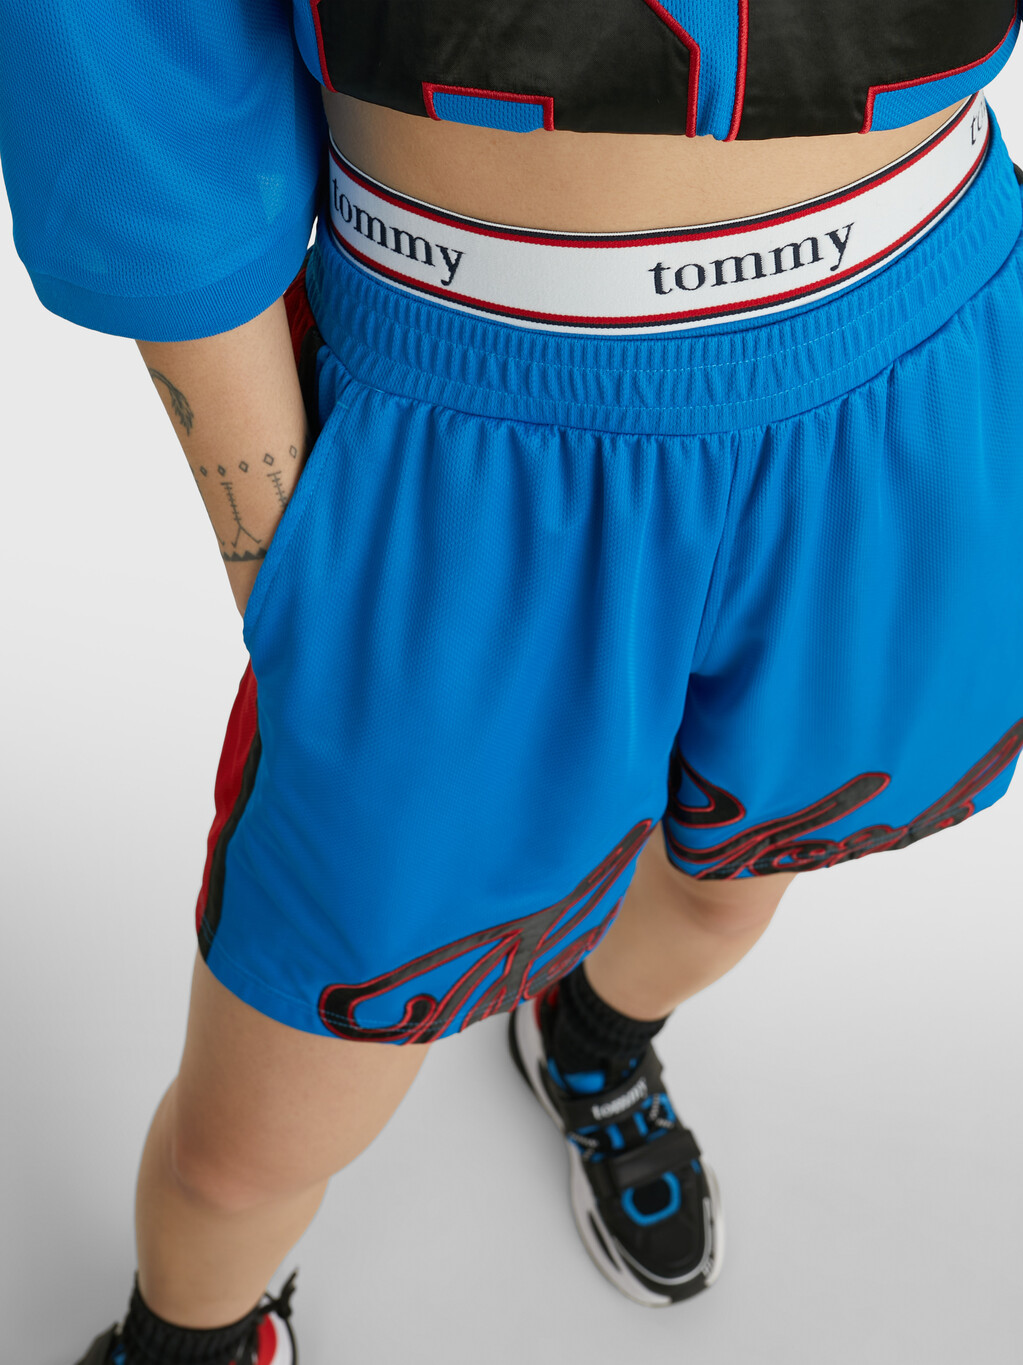 Double Waistband Dual Gender Basketball Shorts, blue